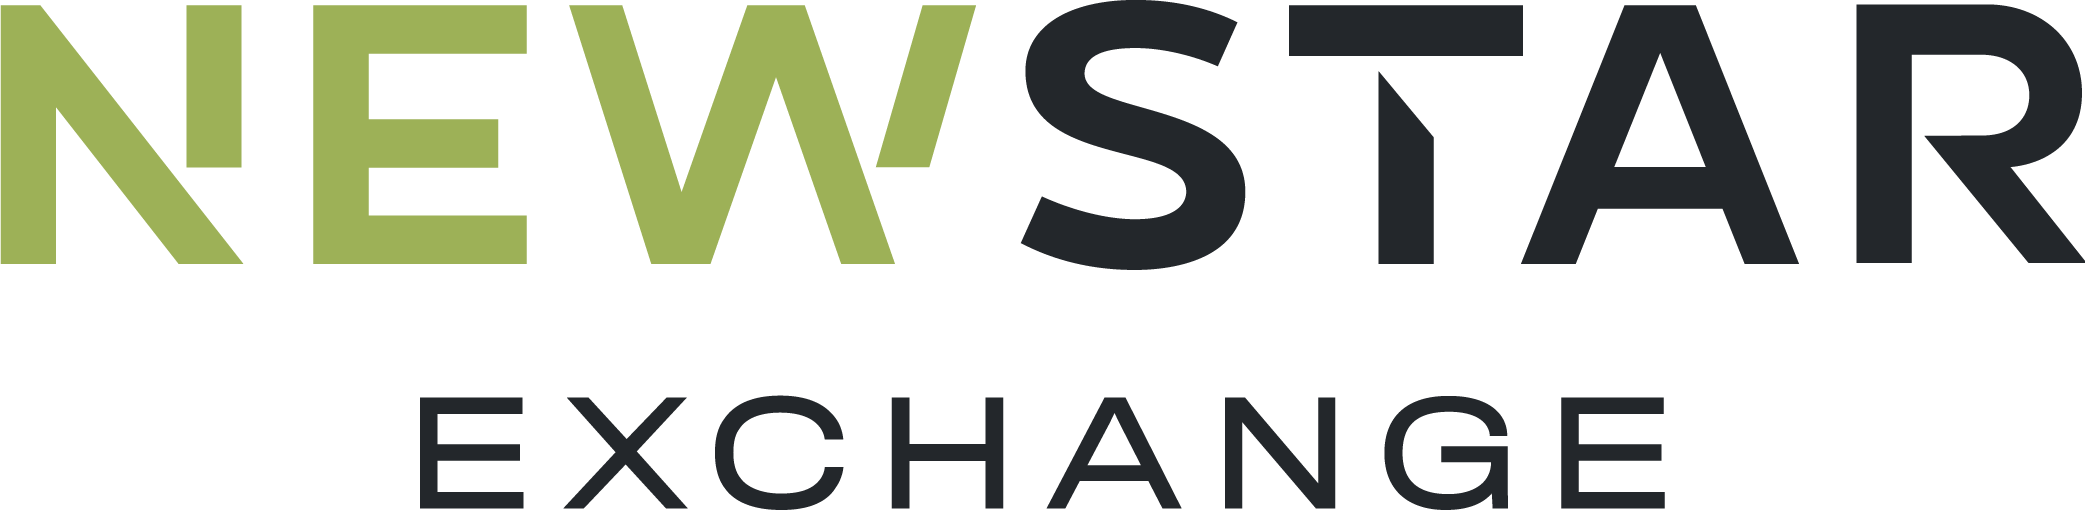 Newstar Exchange logo